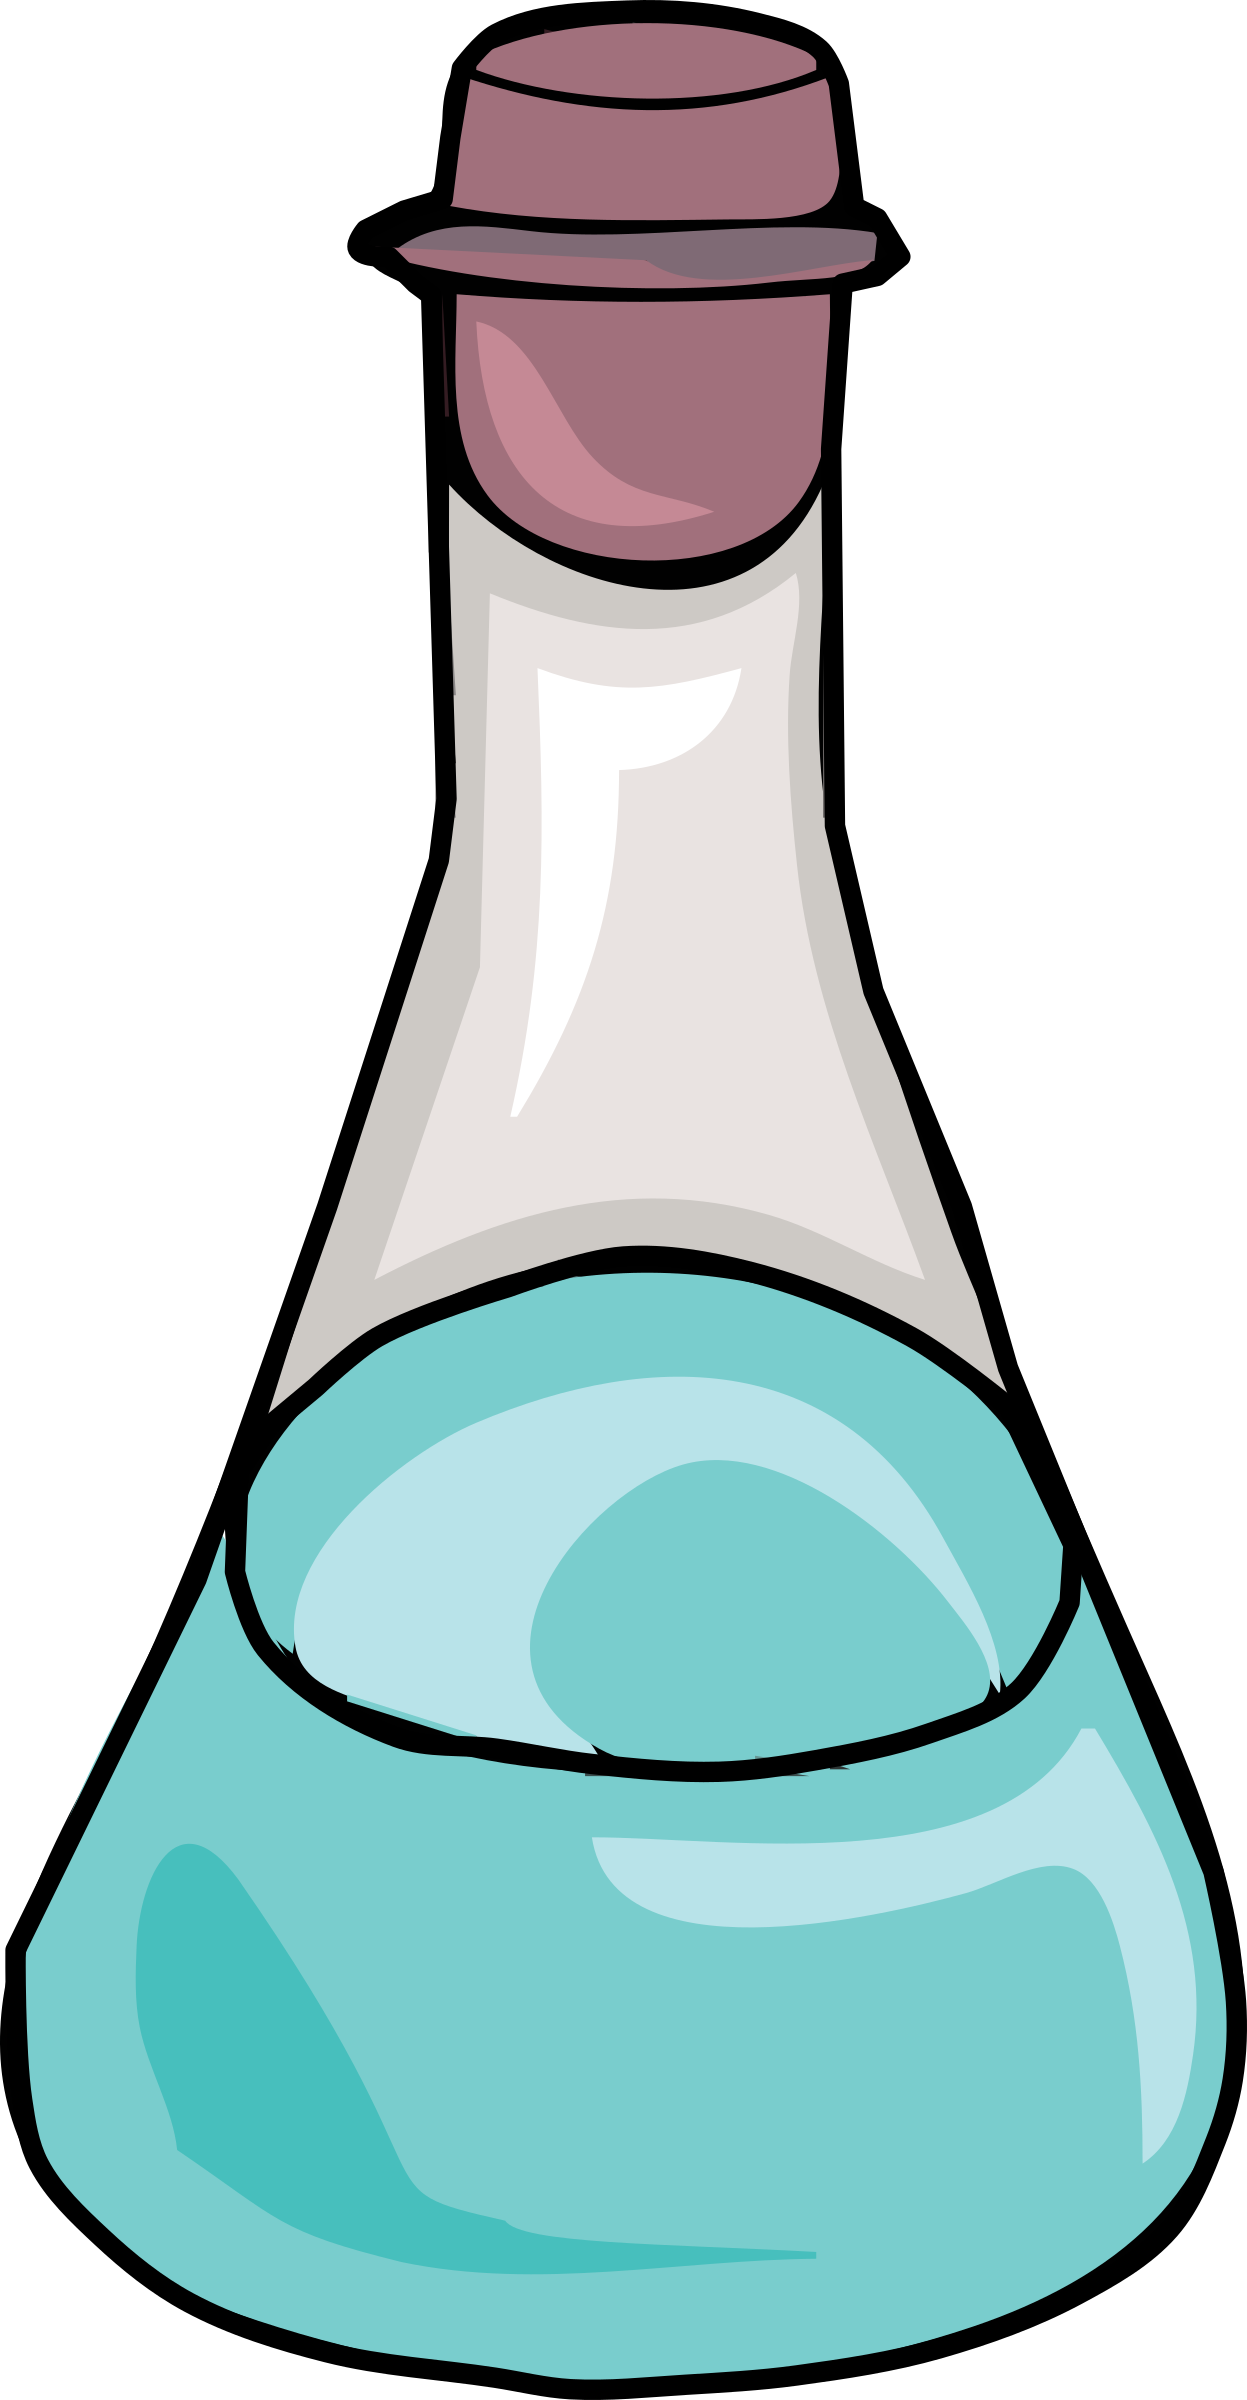 Flask big image png. Clipart science beaker